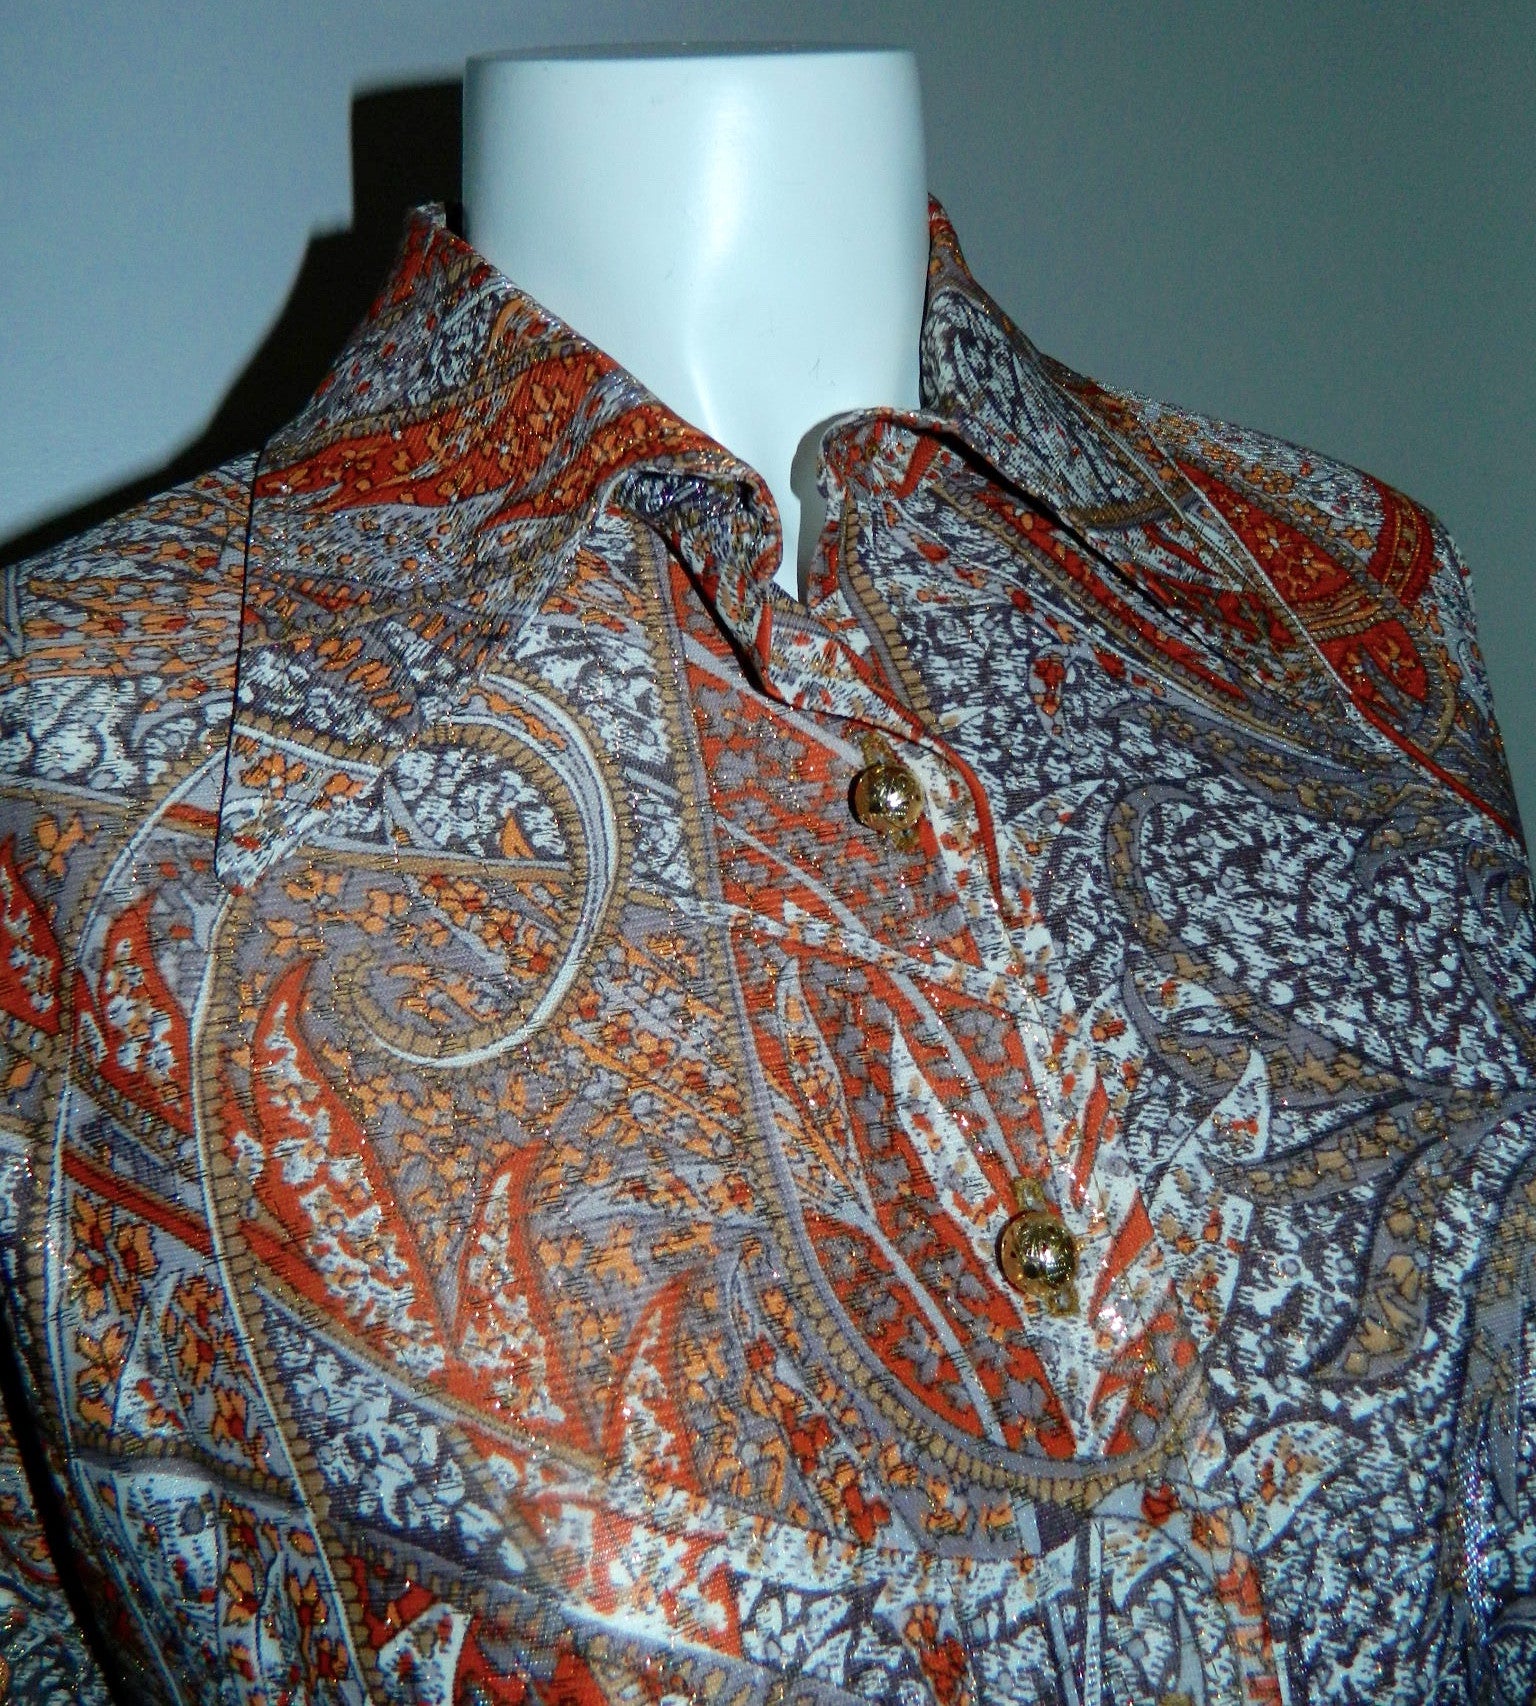 MOD vintage 1960s metallic paisley blouse GLAM earthtones S - M